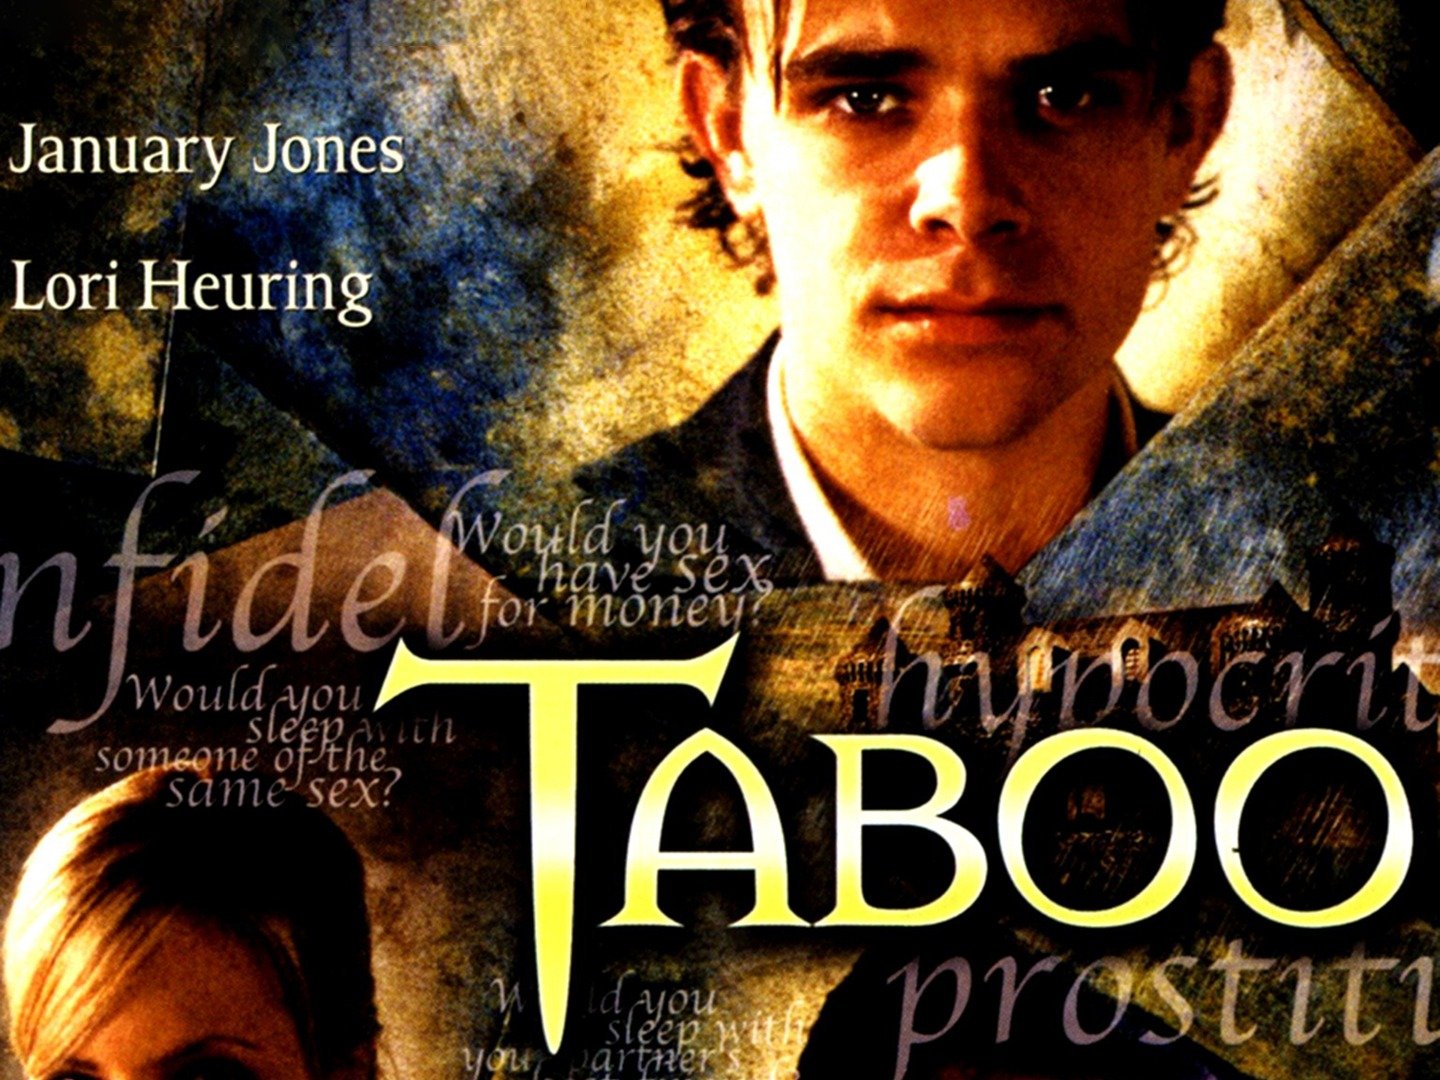 Taboo Movie Telegraph